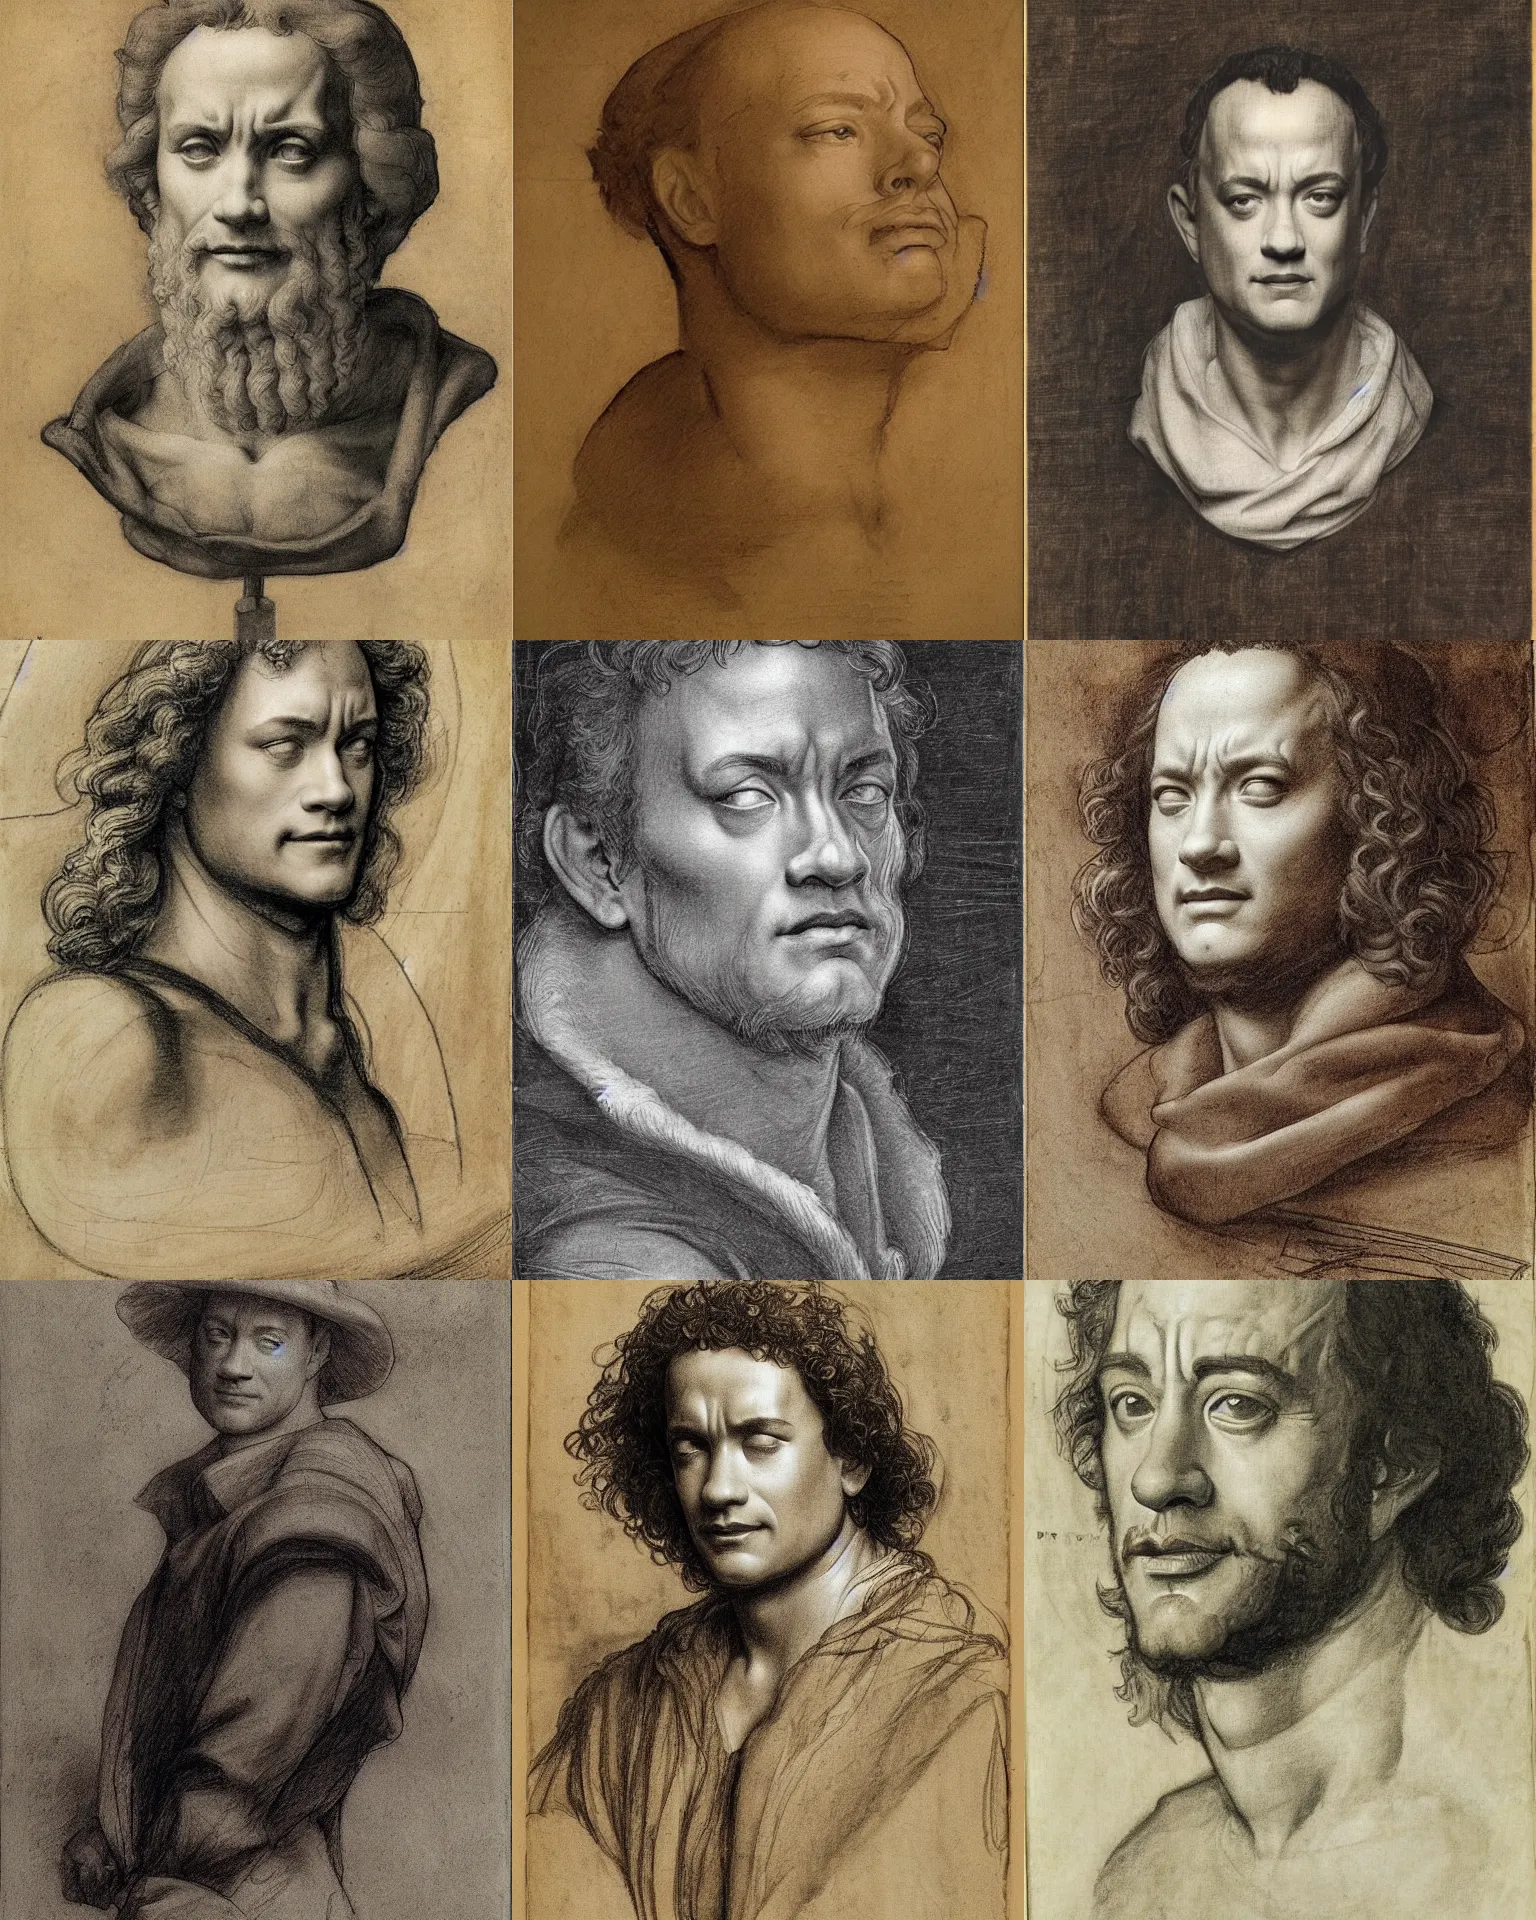 Prompt: portrait of tom hanks, drawing by michelangelo, leonardo da vinci, leyendecker, peter paul rebens